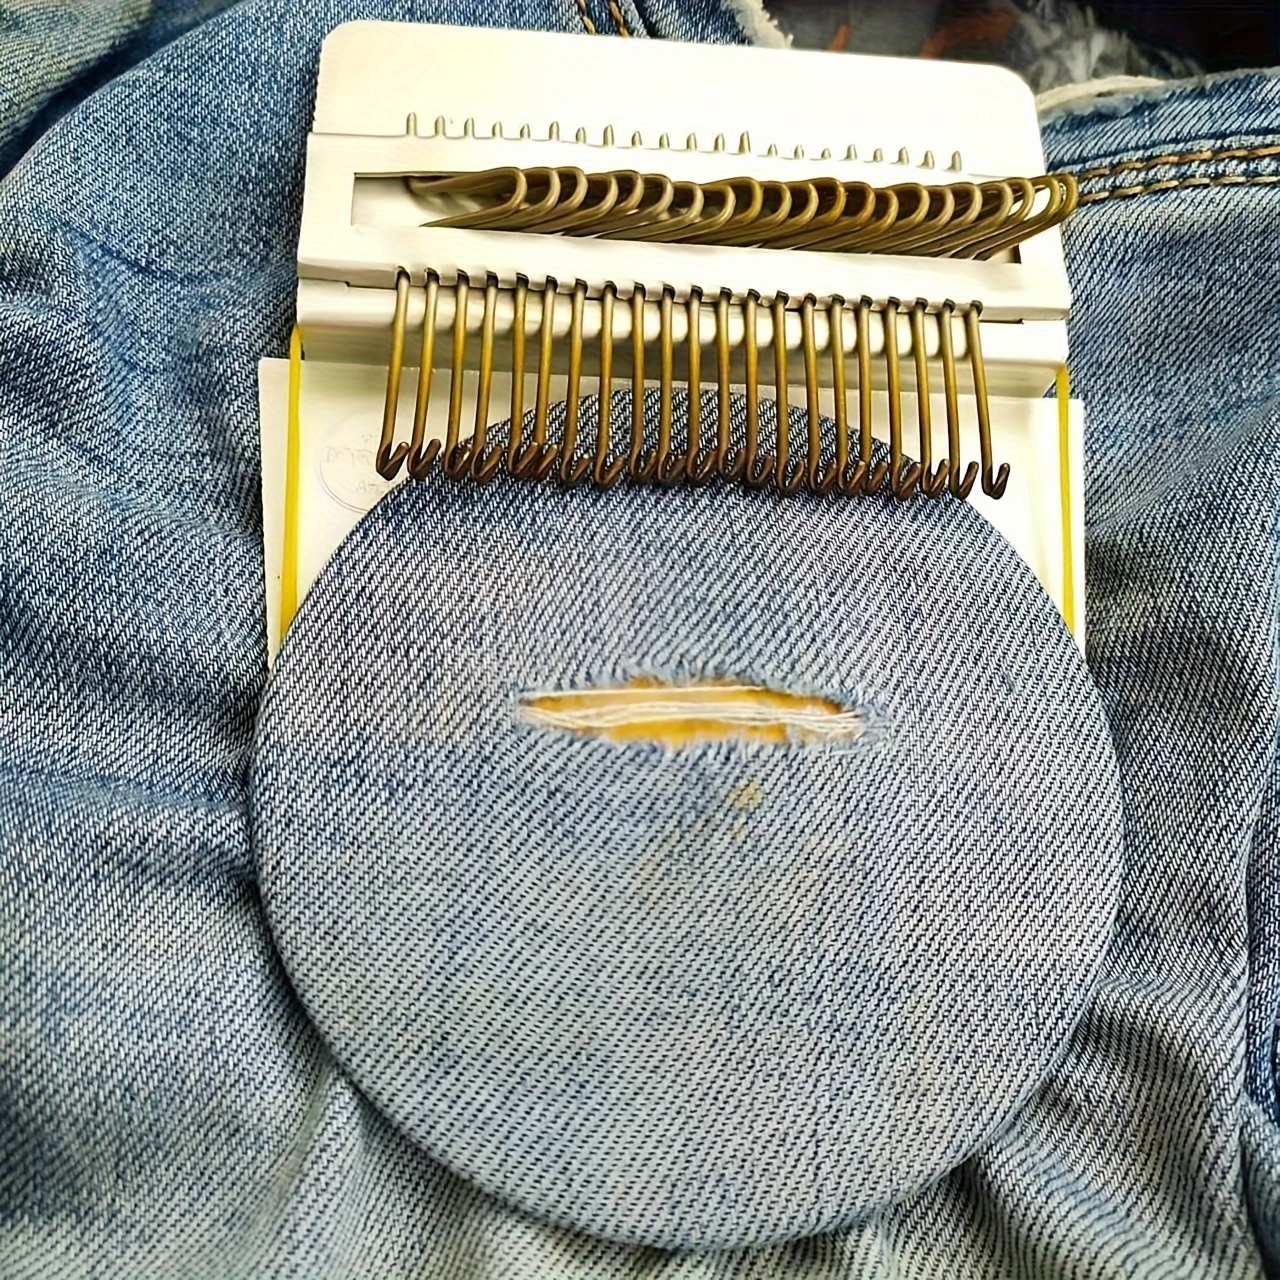 Mini Darning Machine Small Knitting Machine Tools Easy to Carry